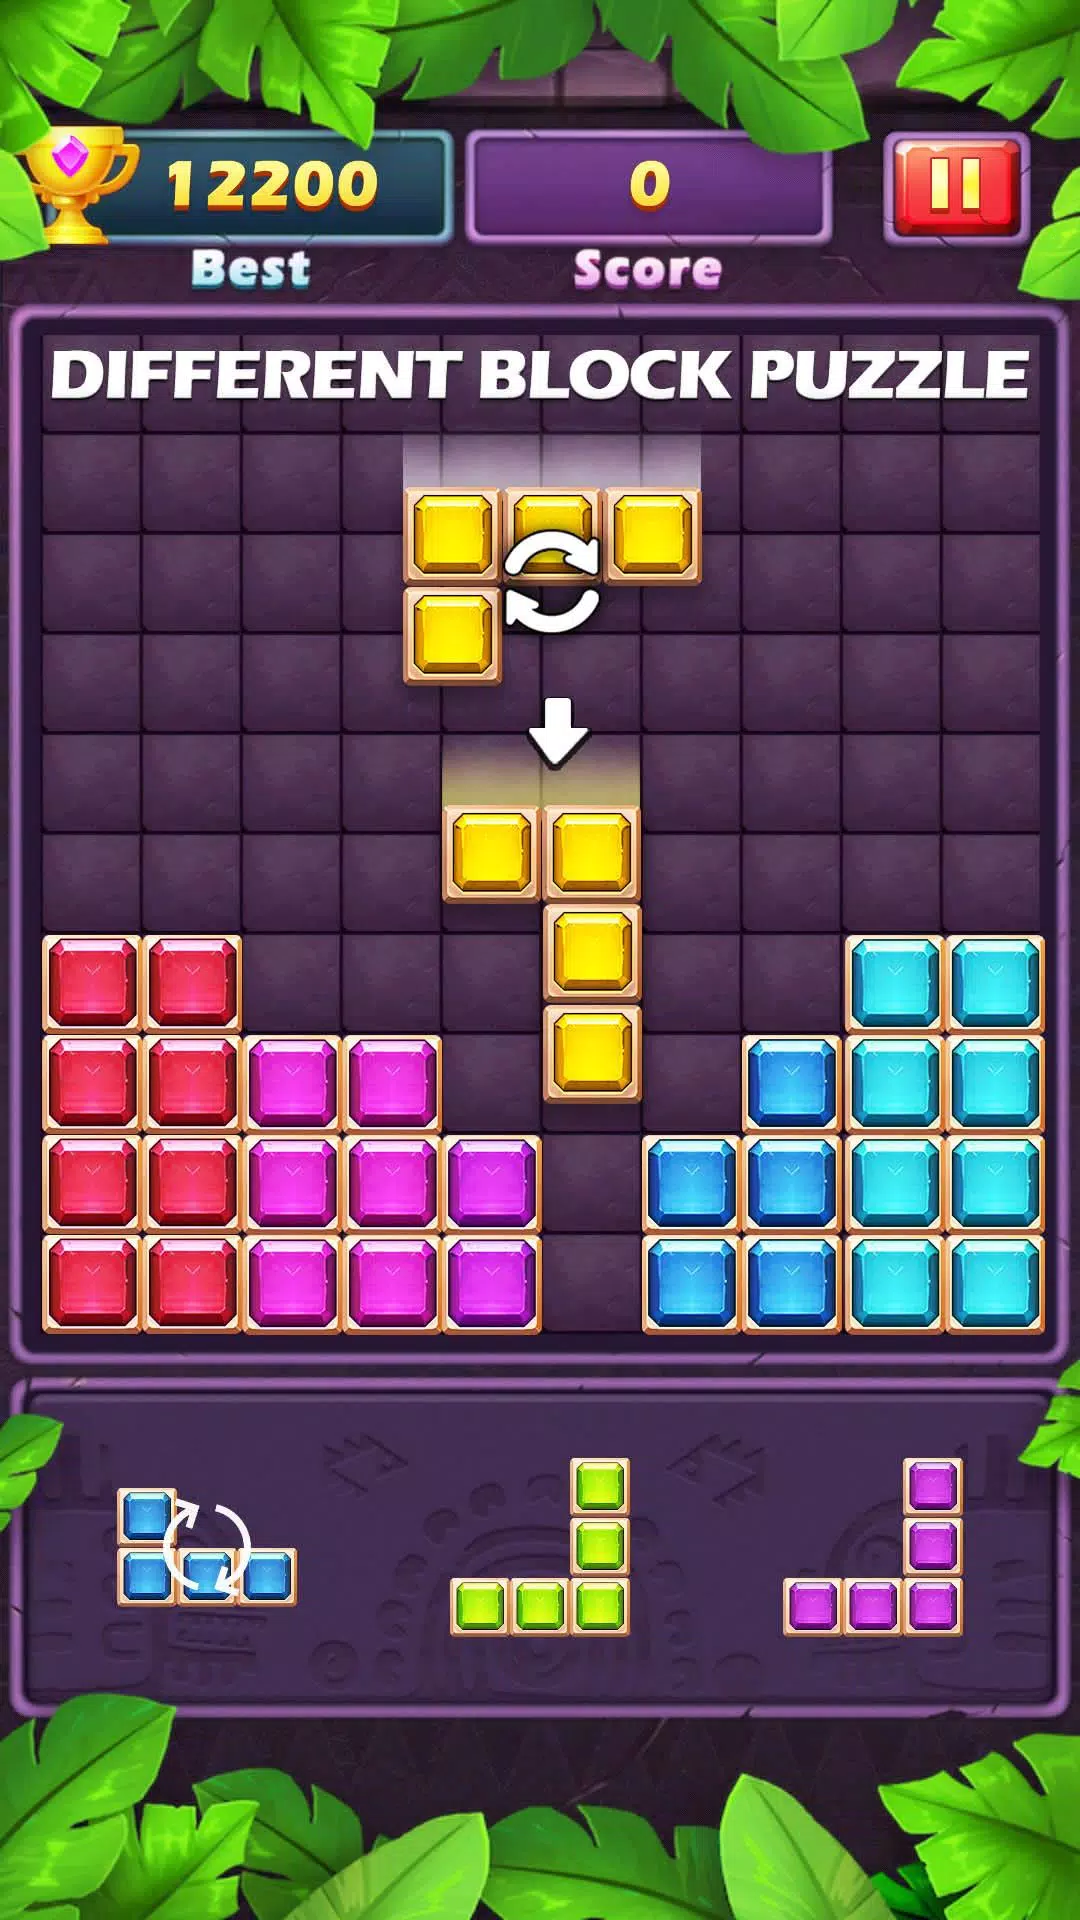 Descarga de APK de Puzzle de Bloques - Block Puzz para Android